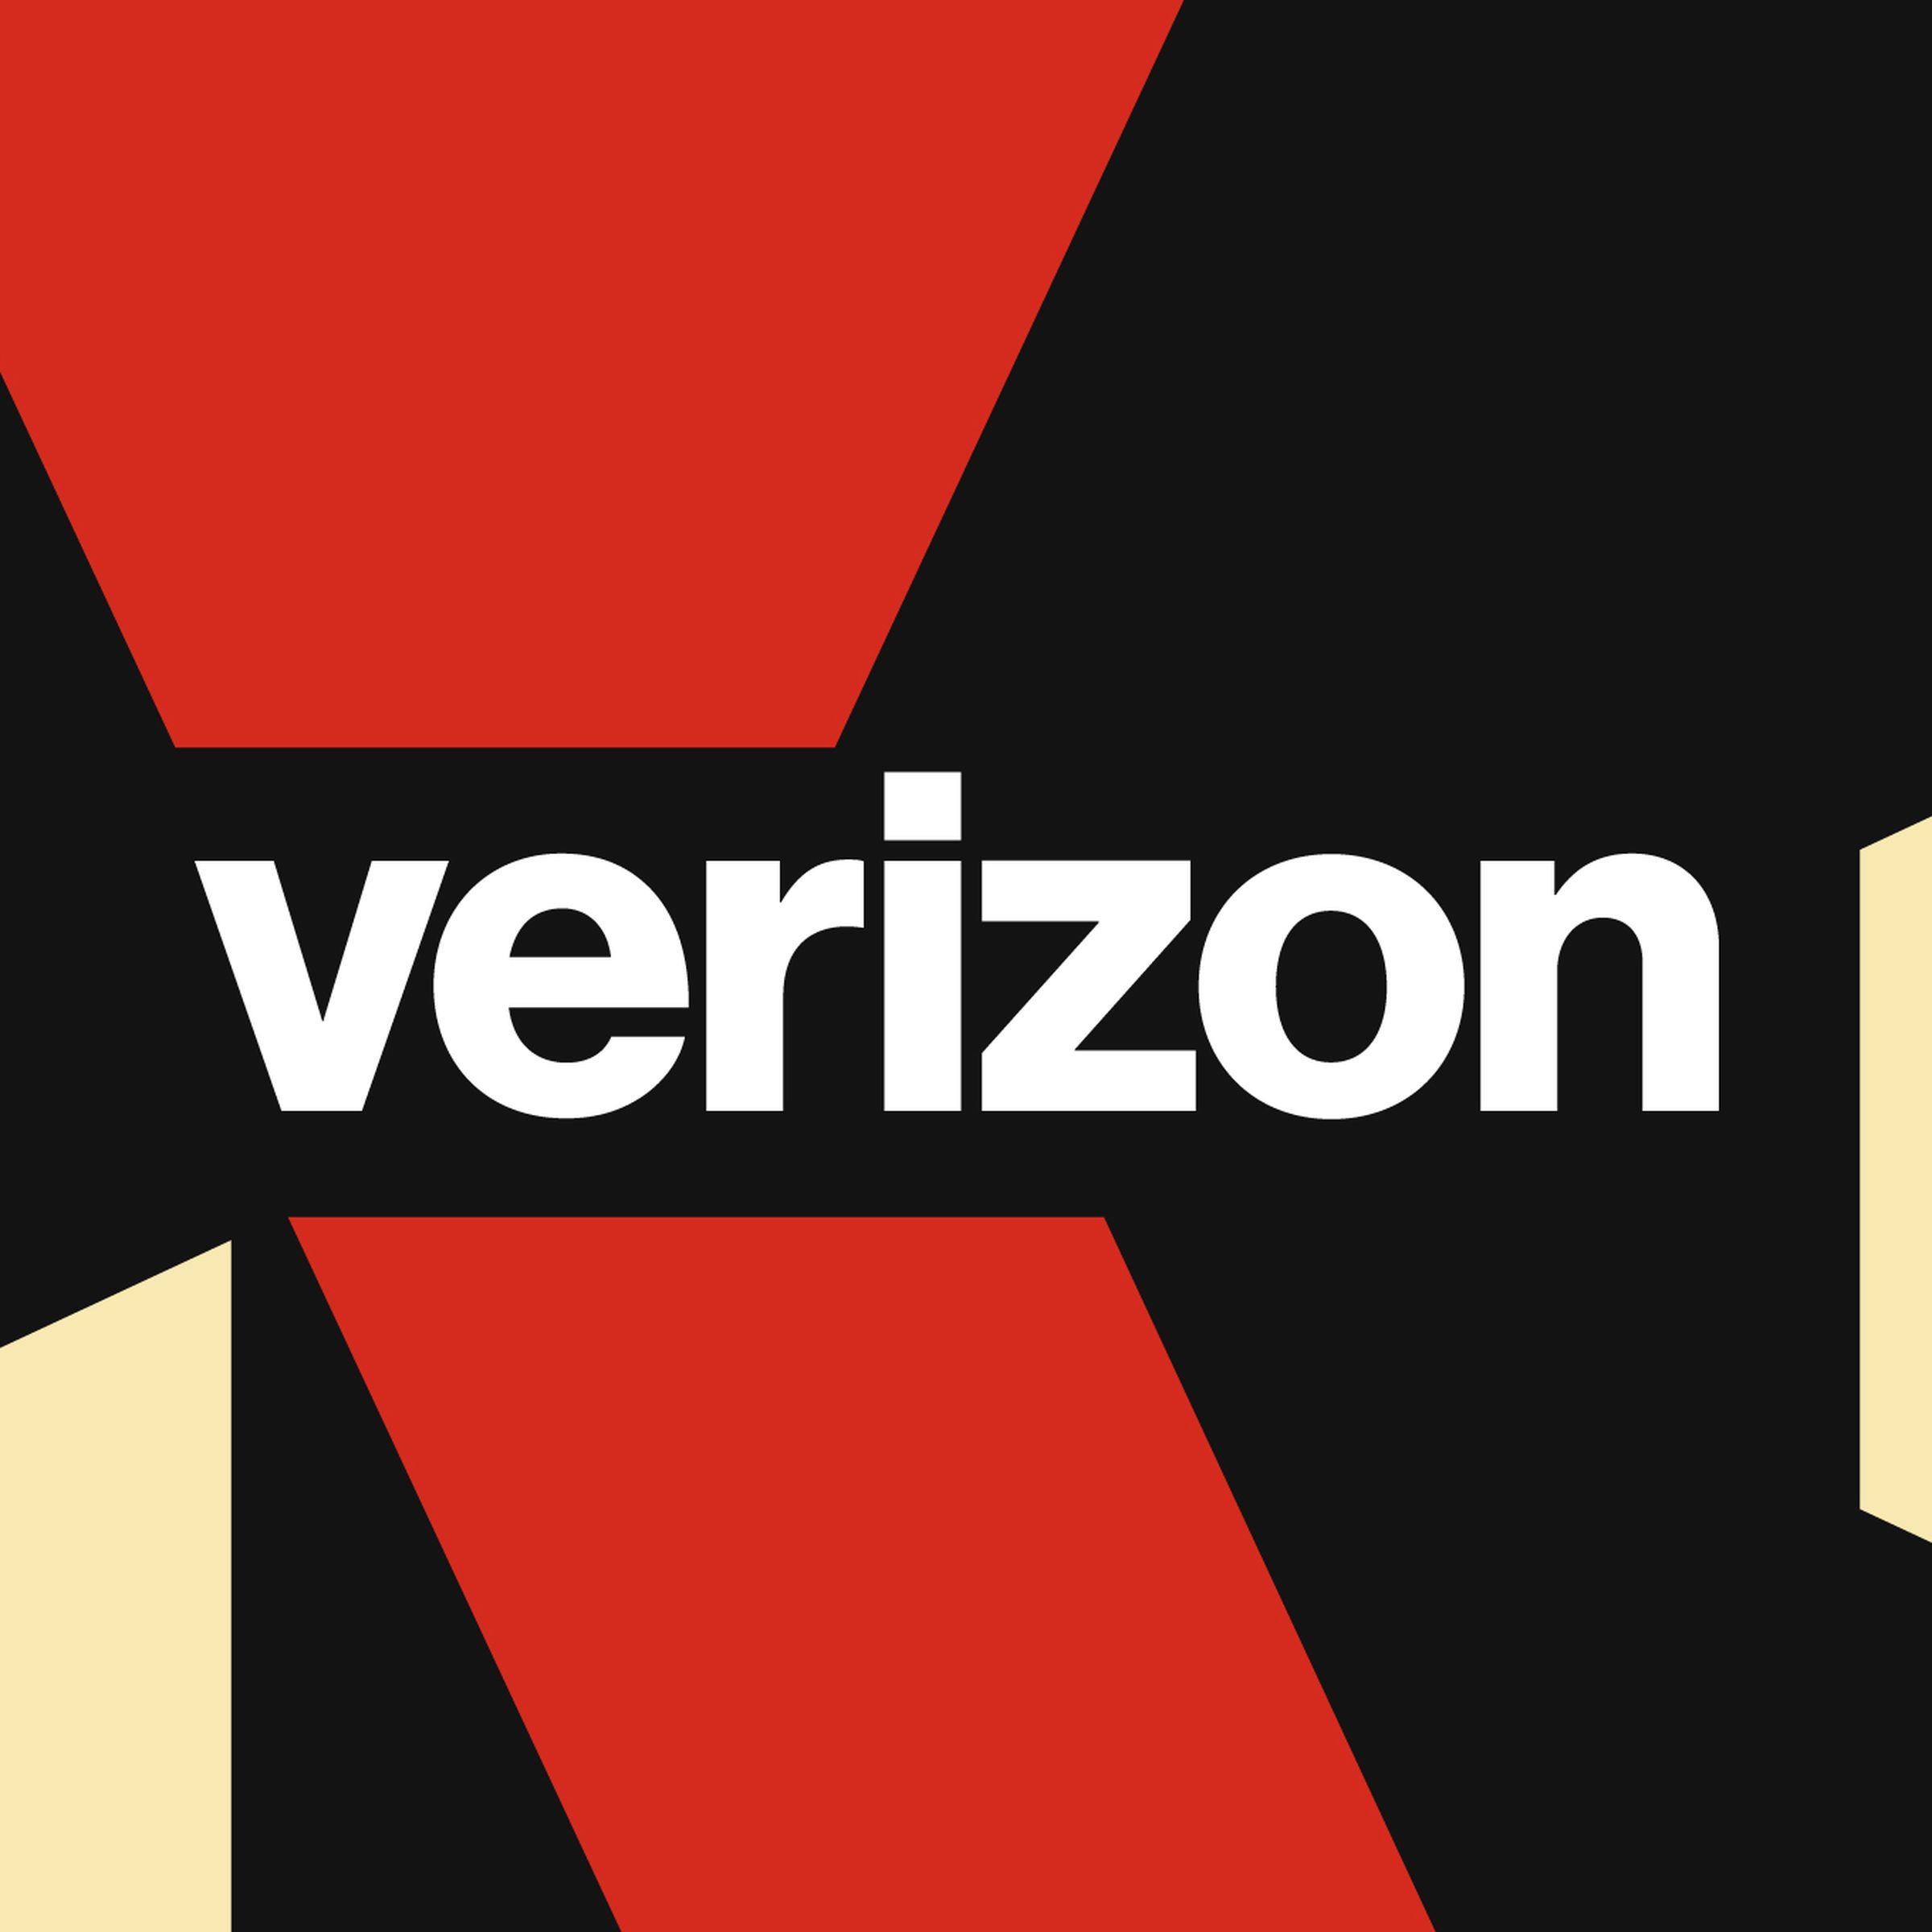 An illustration of the Verizon logo.